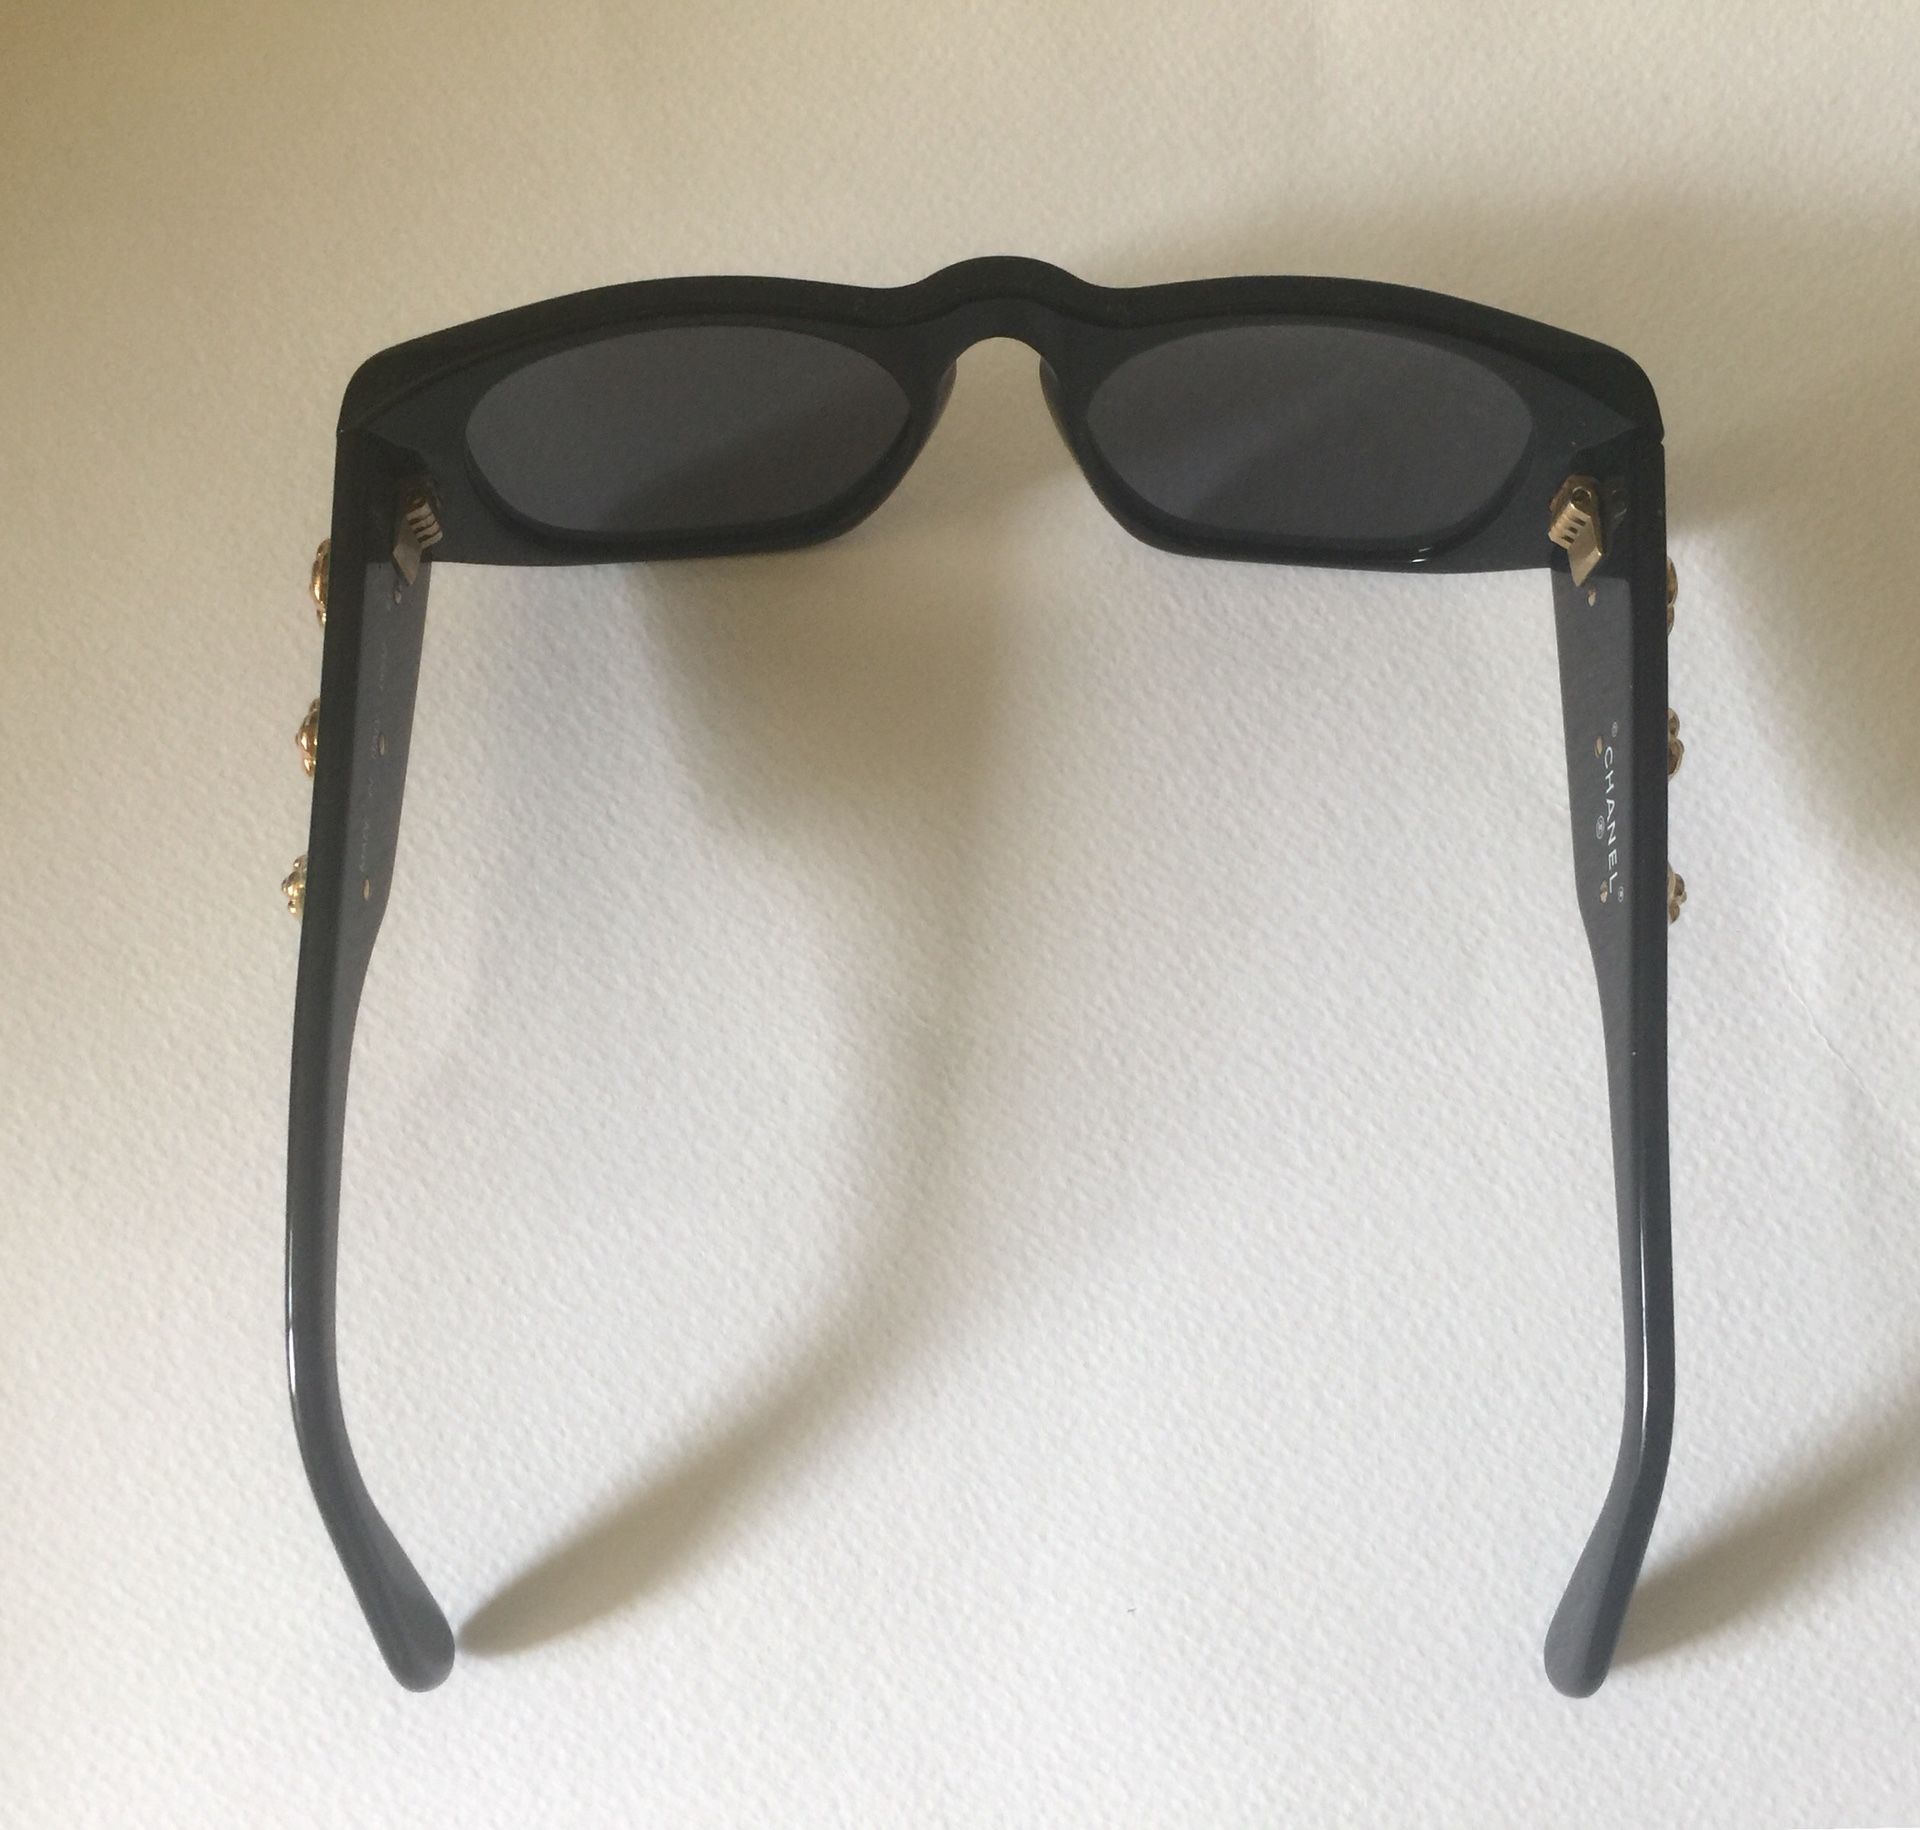 chanel glasses sunglasses